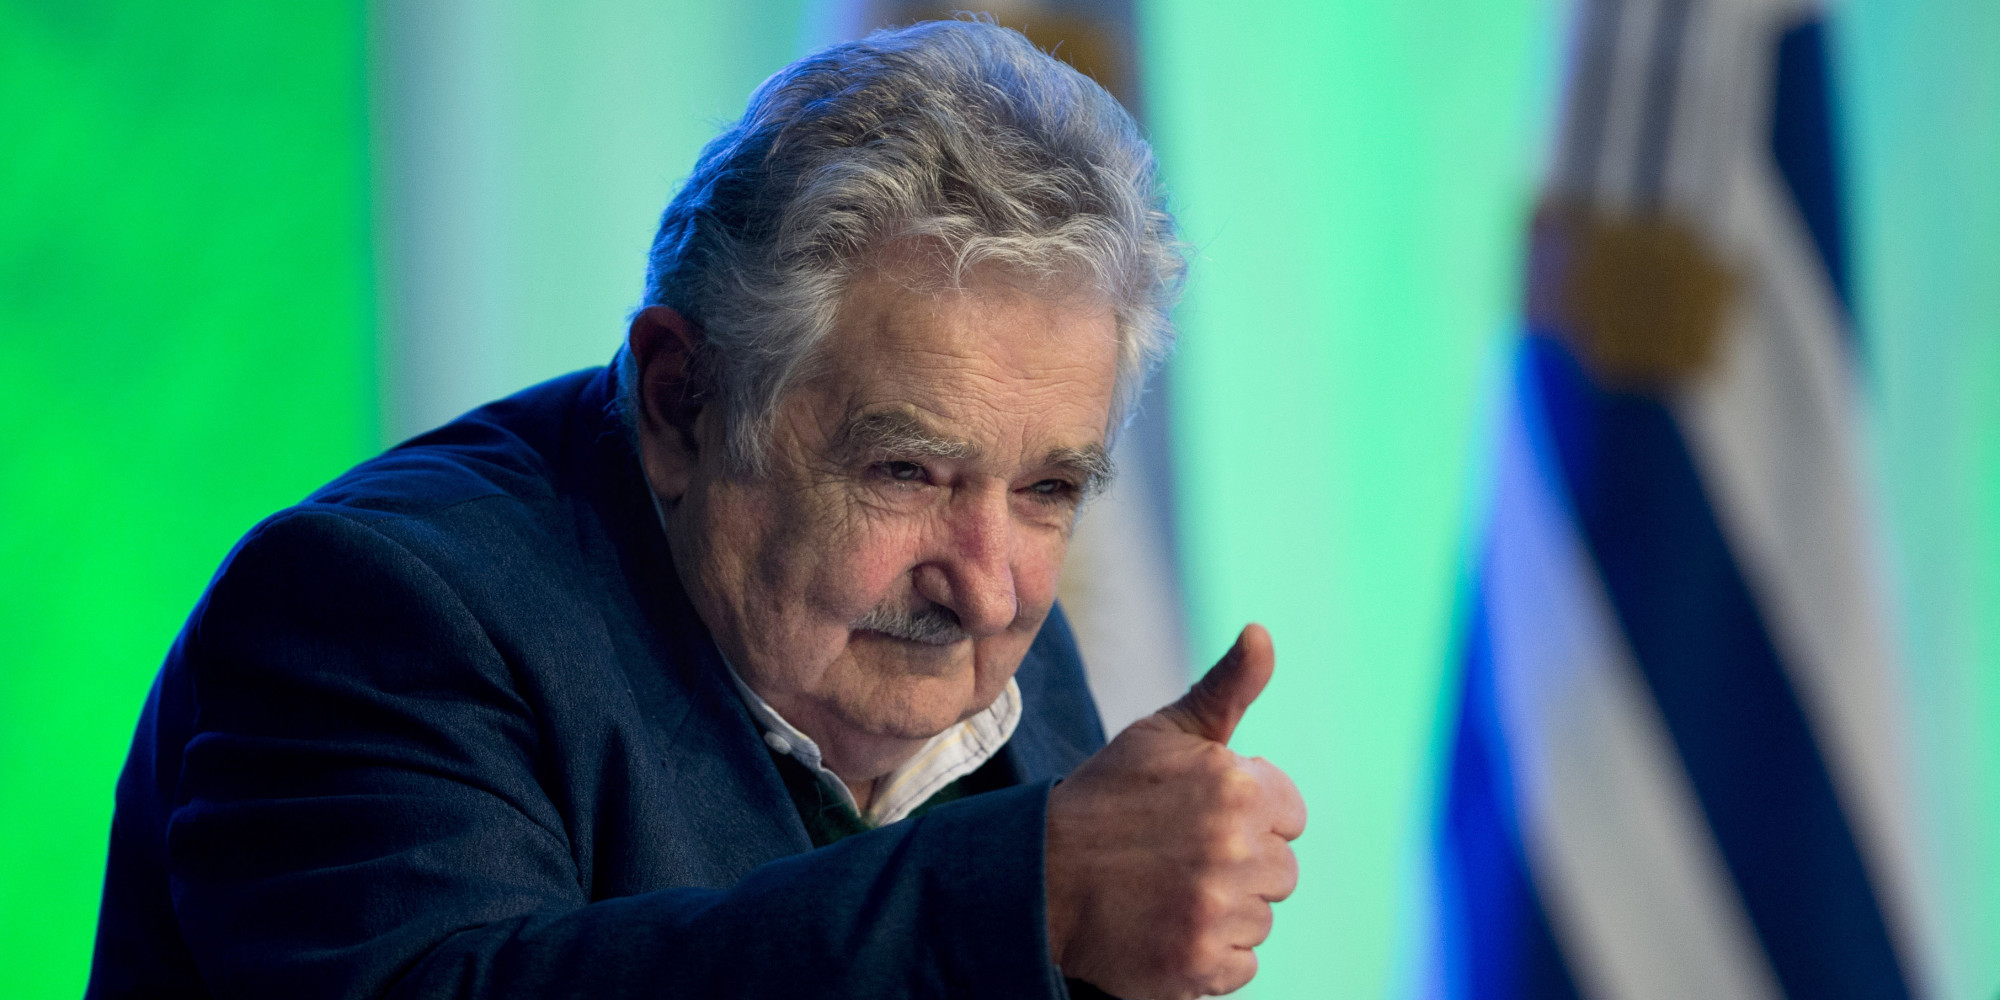  Jose Mujica  (AP Photo/Natacha Pisarenko)